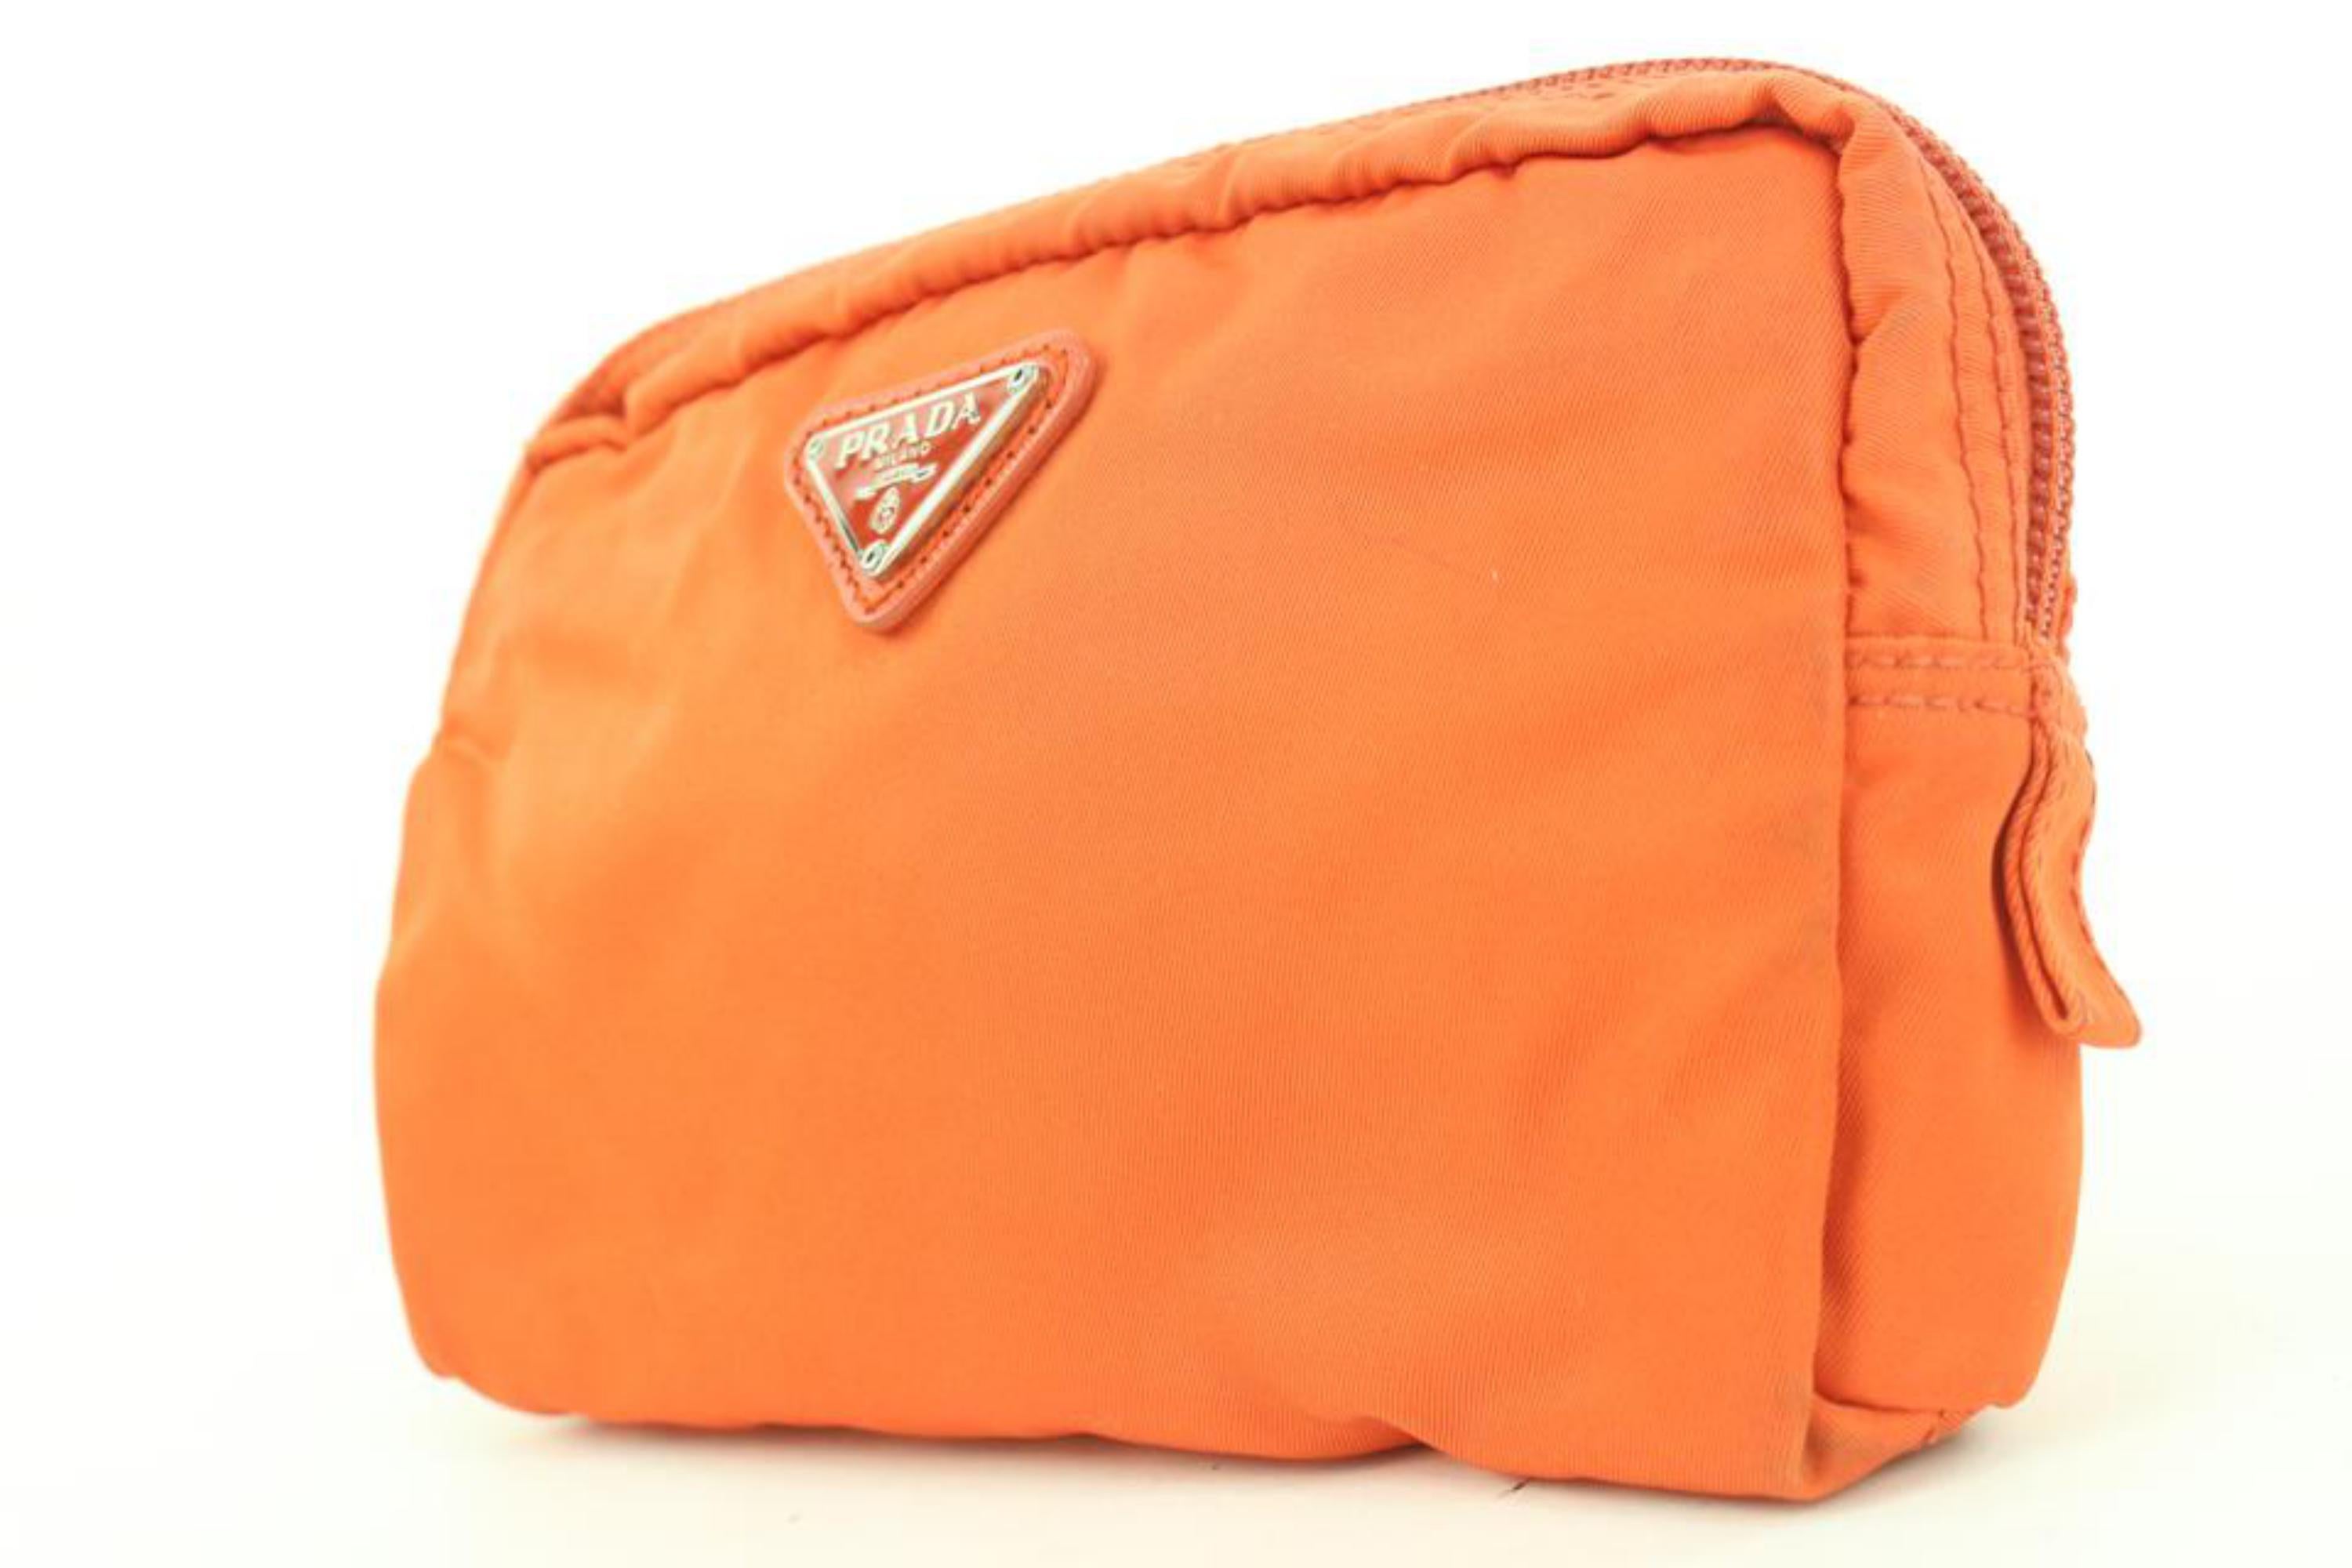 Prada Orange Nylon Cosmetic Pouch Make Up bag 1PR62a 5